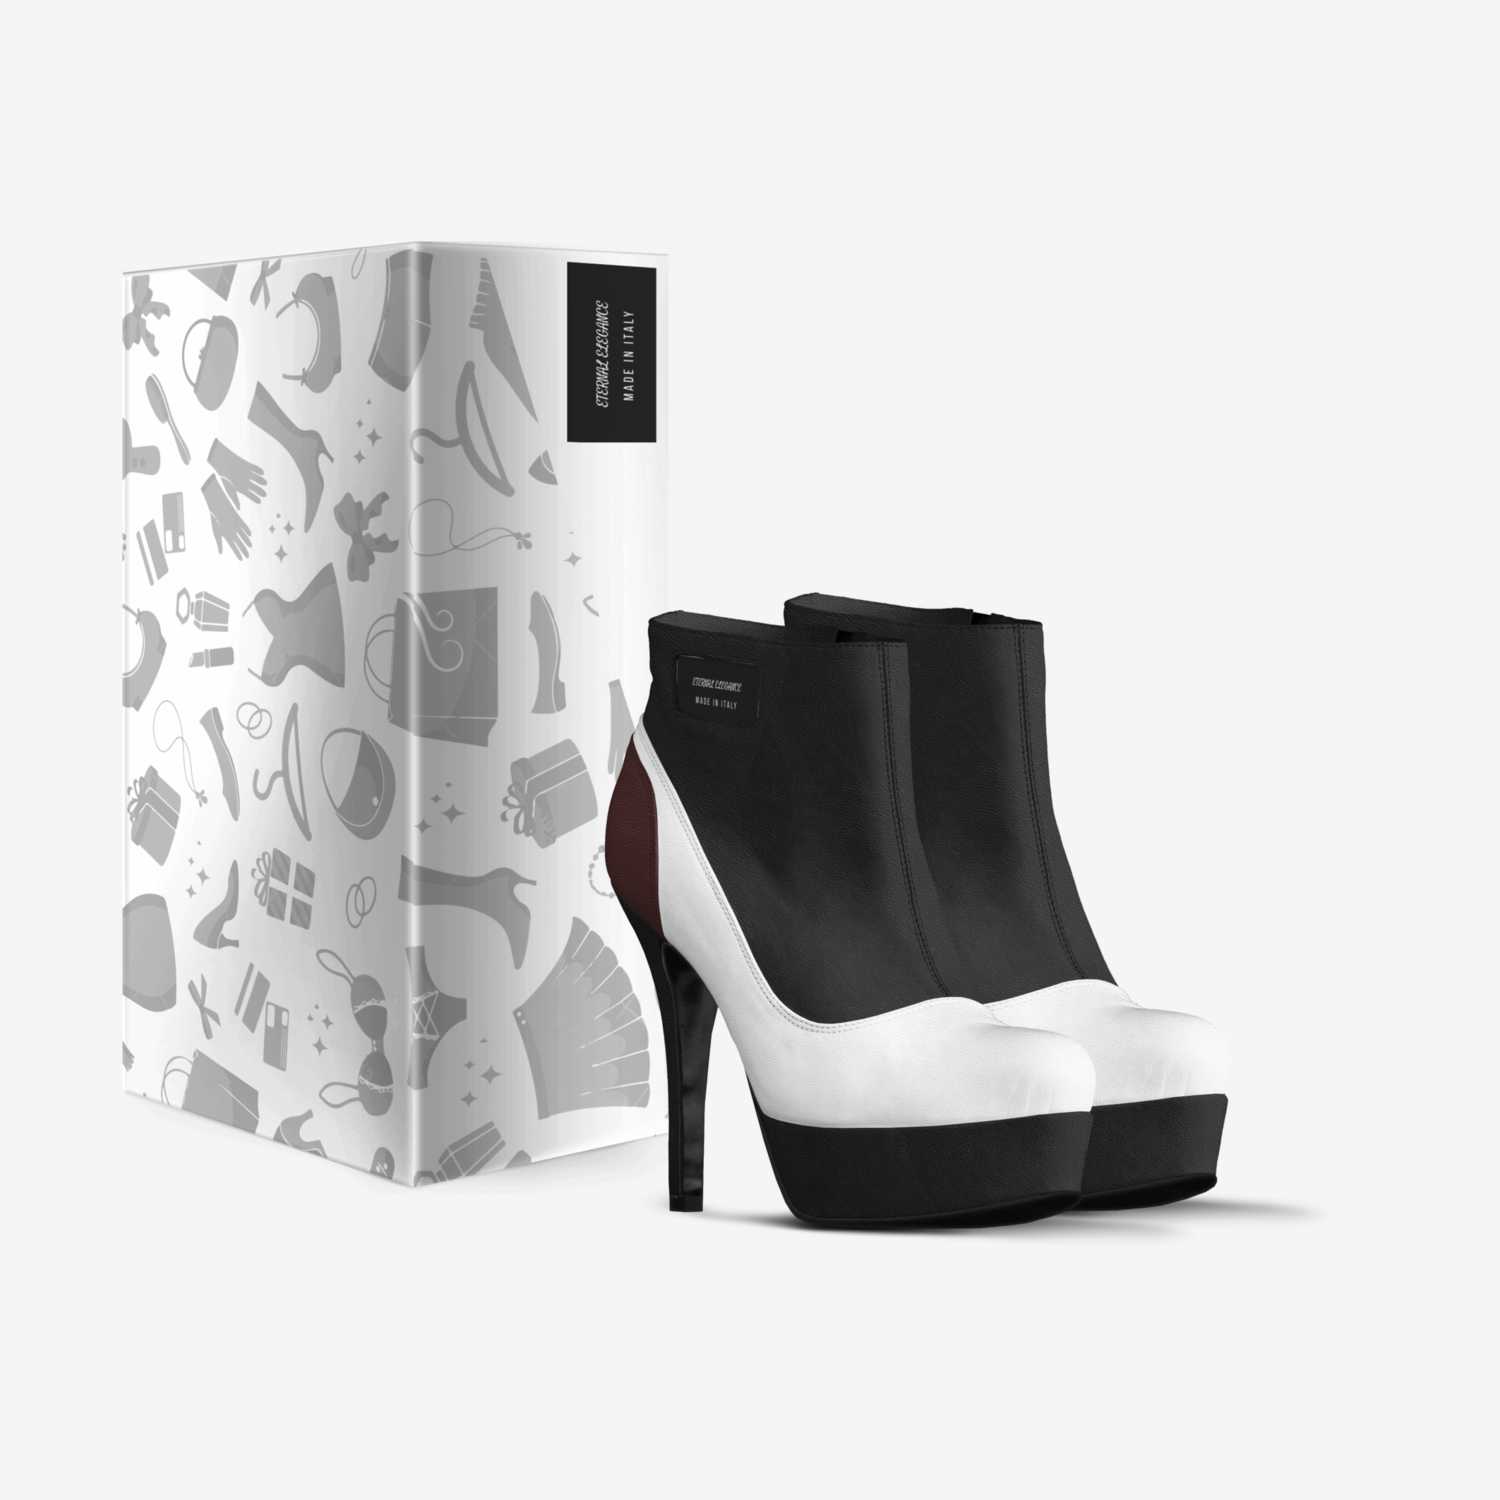 ETERNAL ELEGANCE custom made in Italy shoes by Tiff Harris | Box view